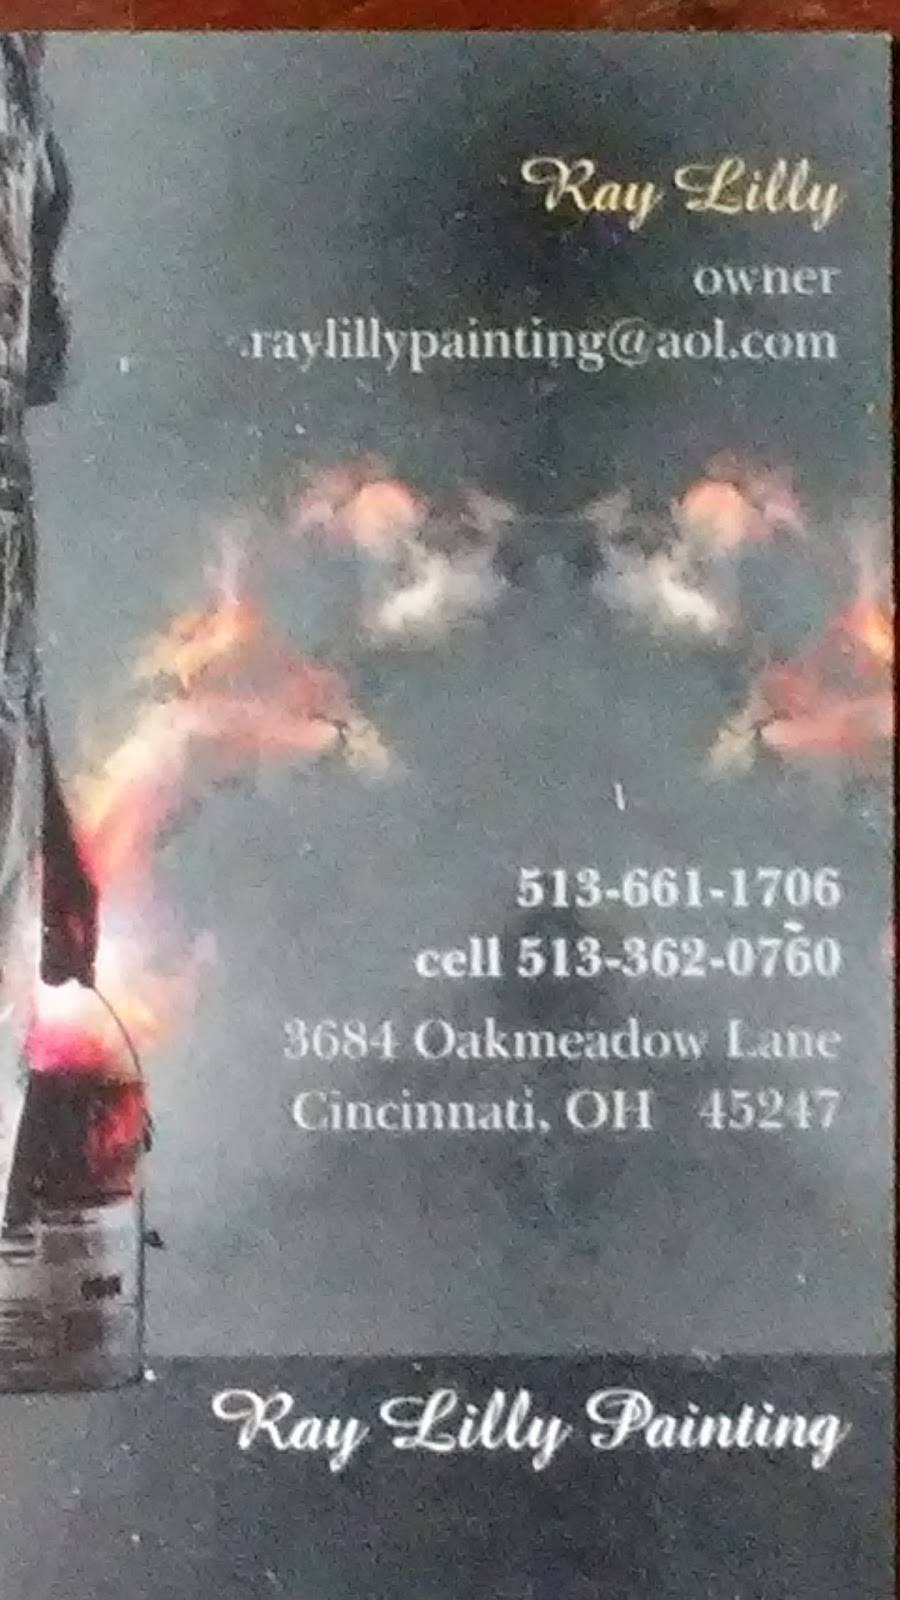 Ray Lilly Painting | 3684 Oakmeadow Ln, Cincinnati, OH 45247 | Phone: (513) 661-1706